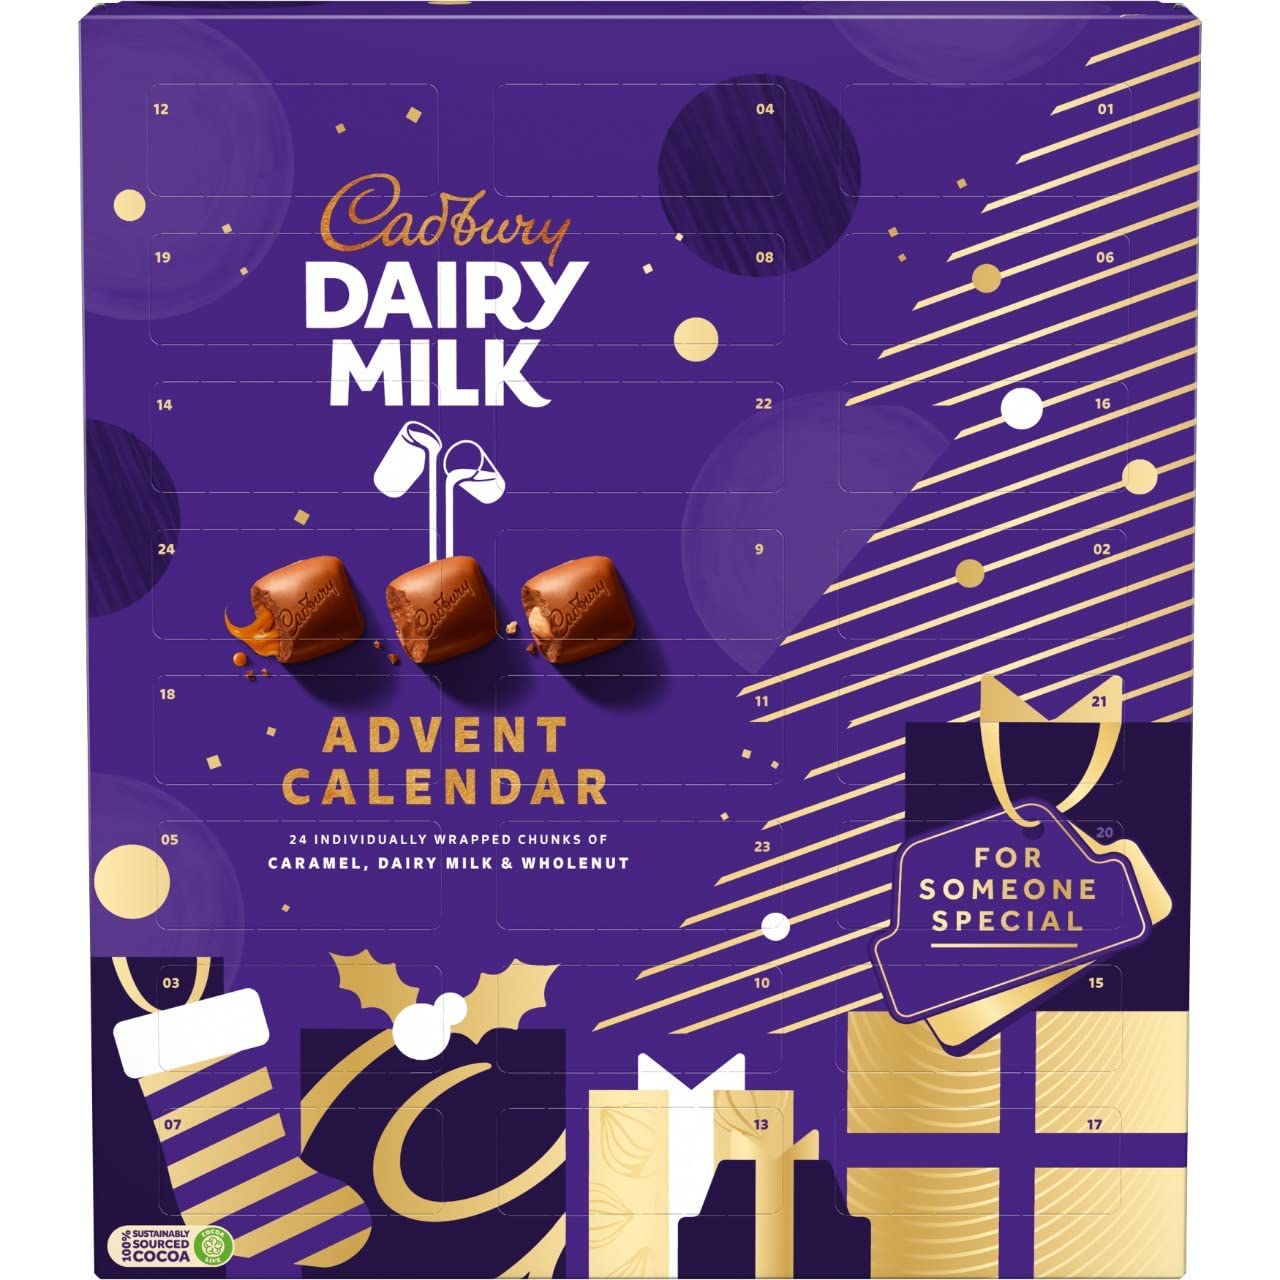 Cadbury Heroes Adventure Advent Calendar 230G | Bookazine HK